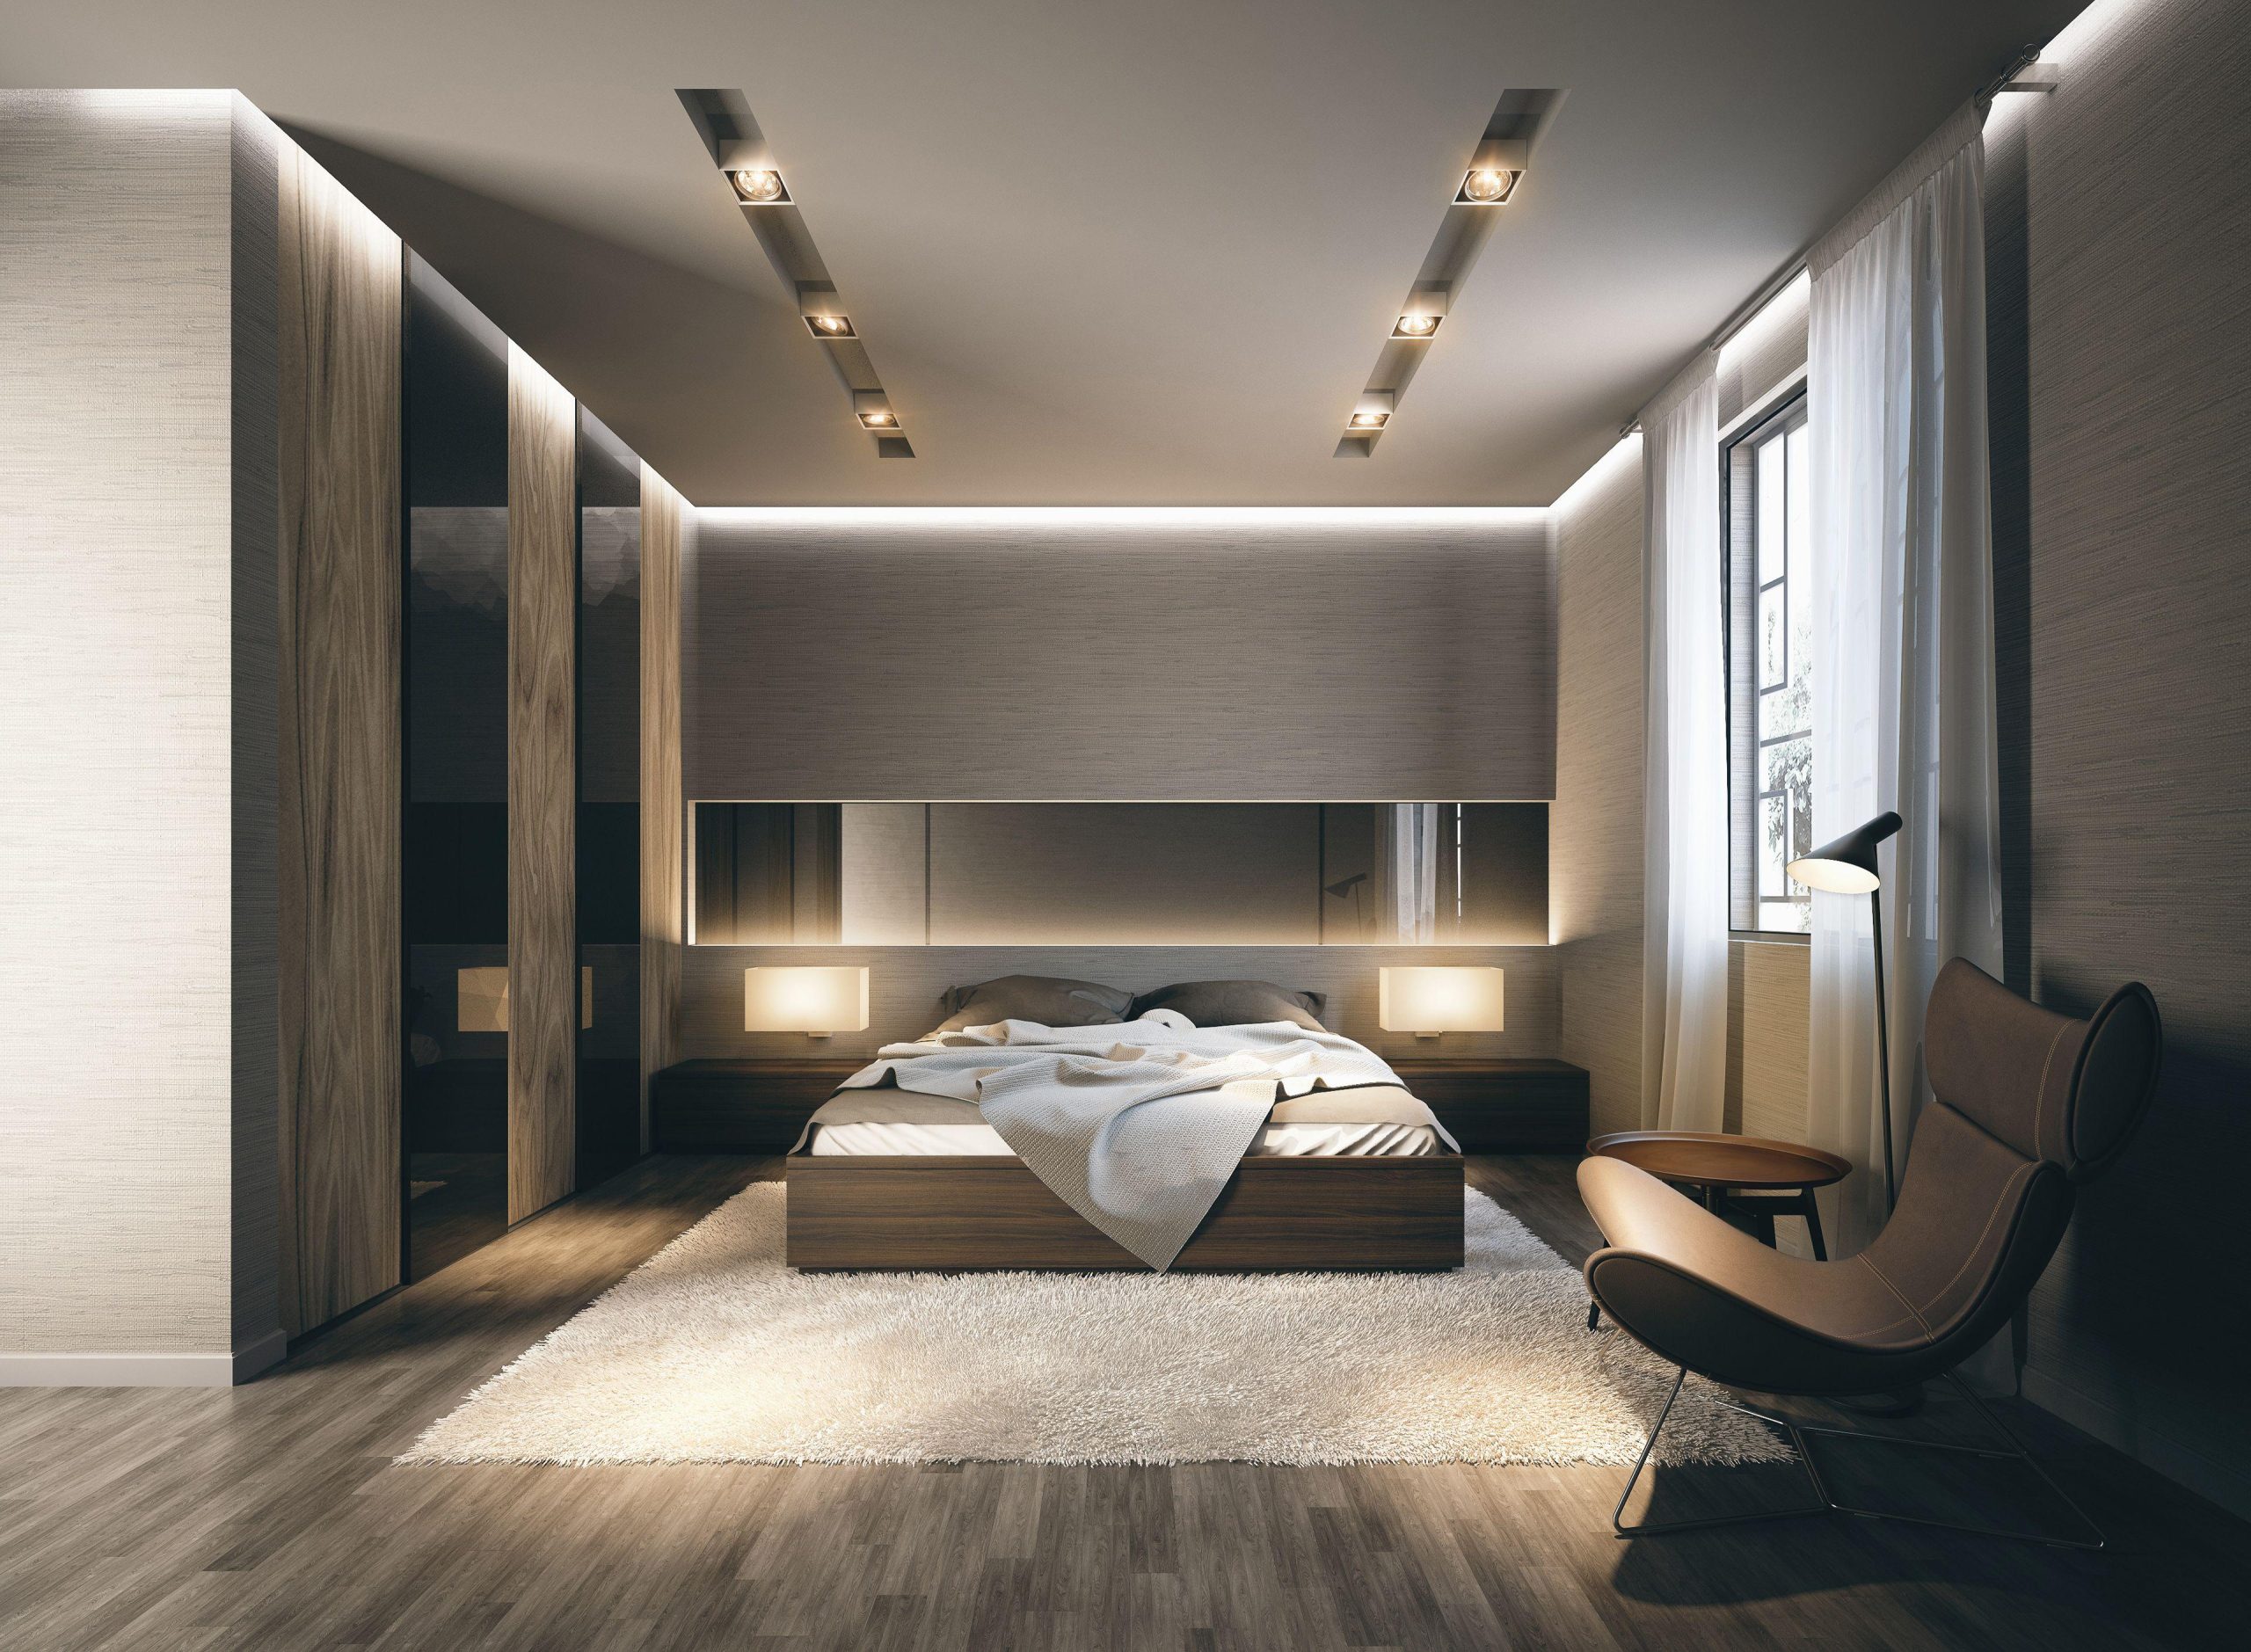 Studio Apartment Bedroom Ideas